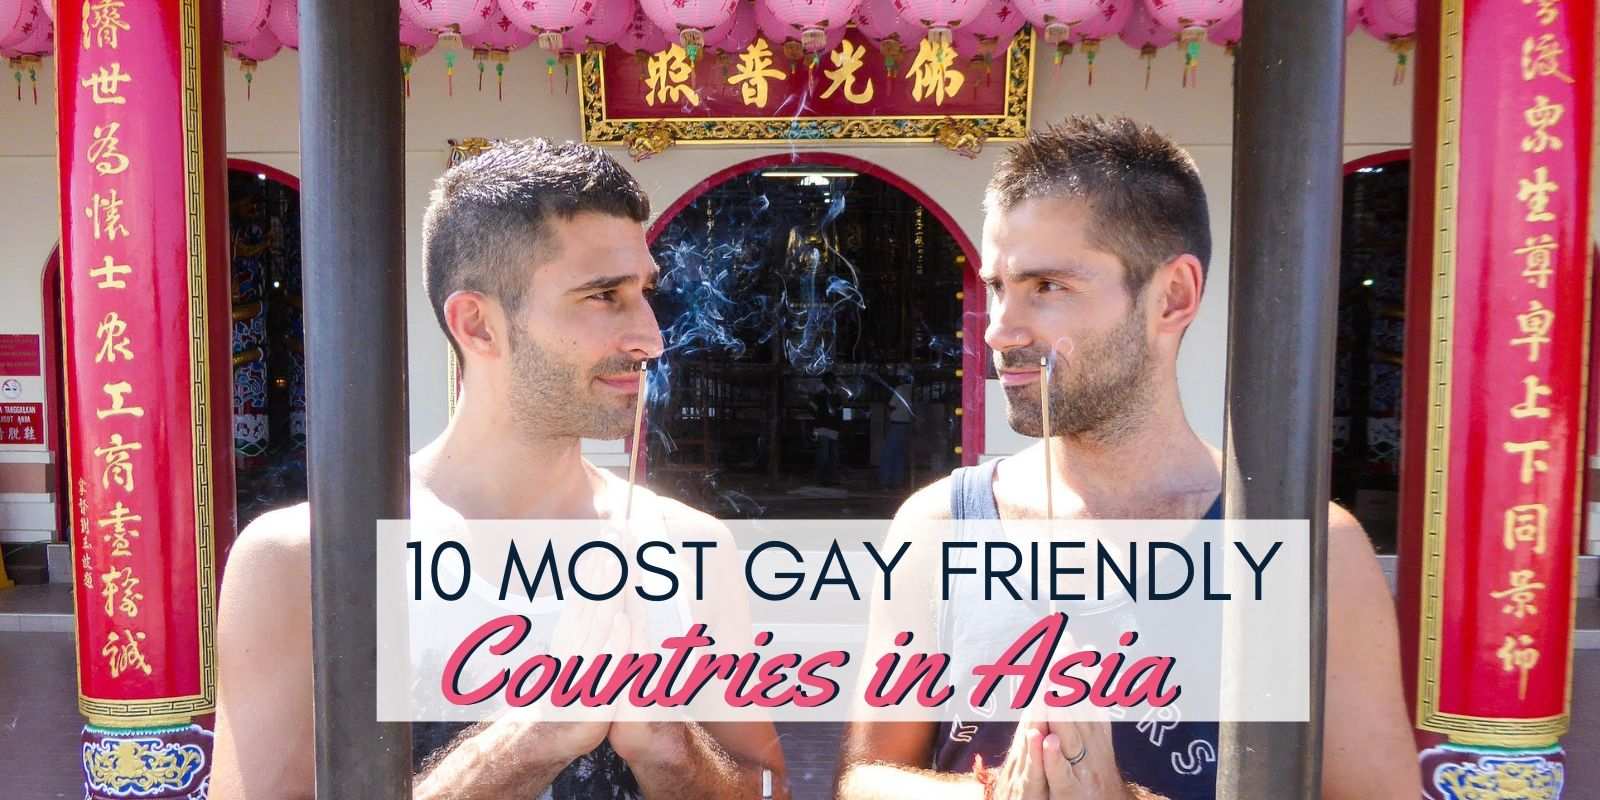 Bombay gay dating sito